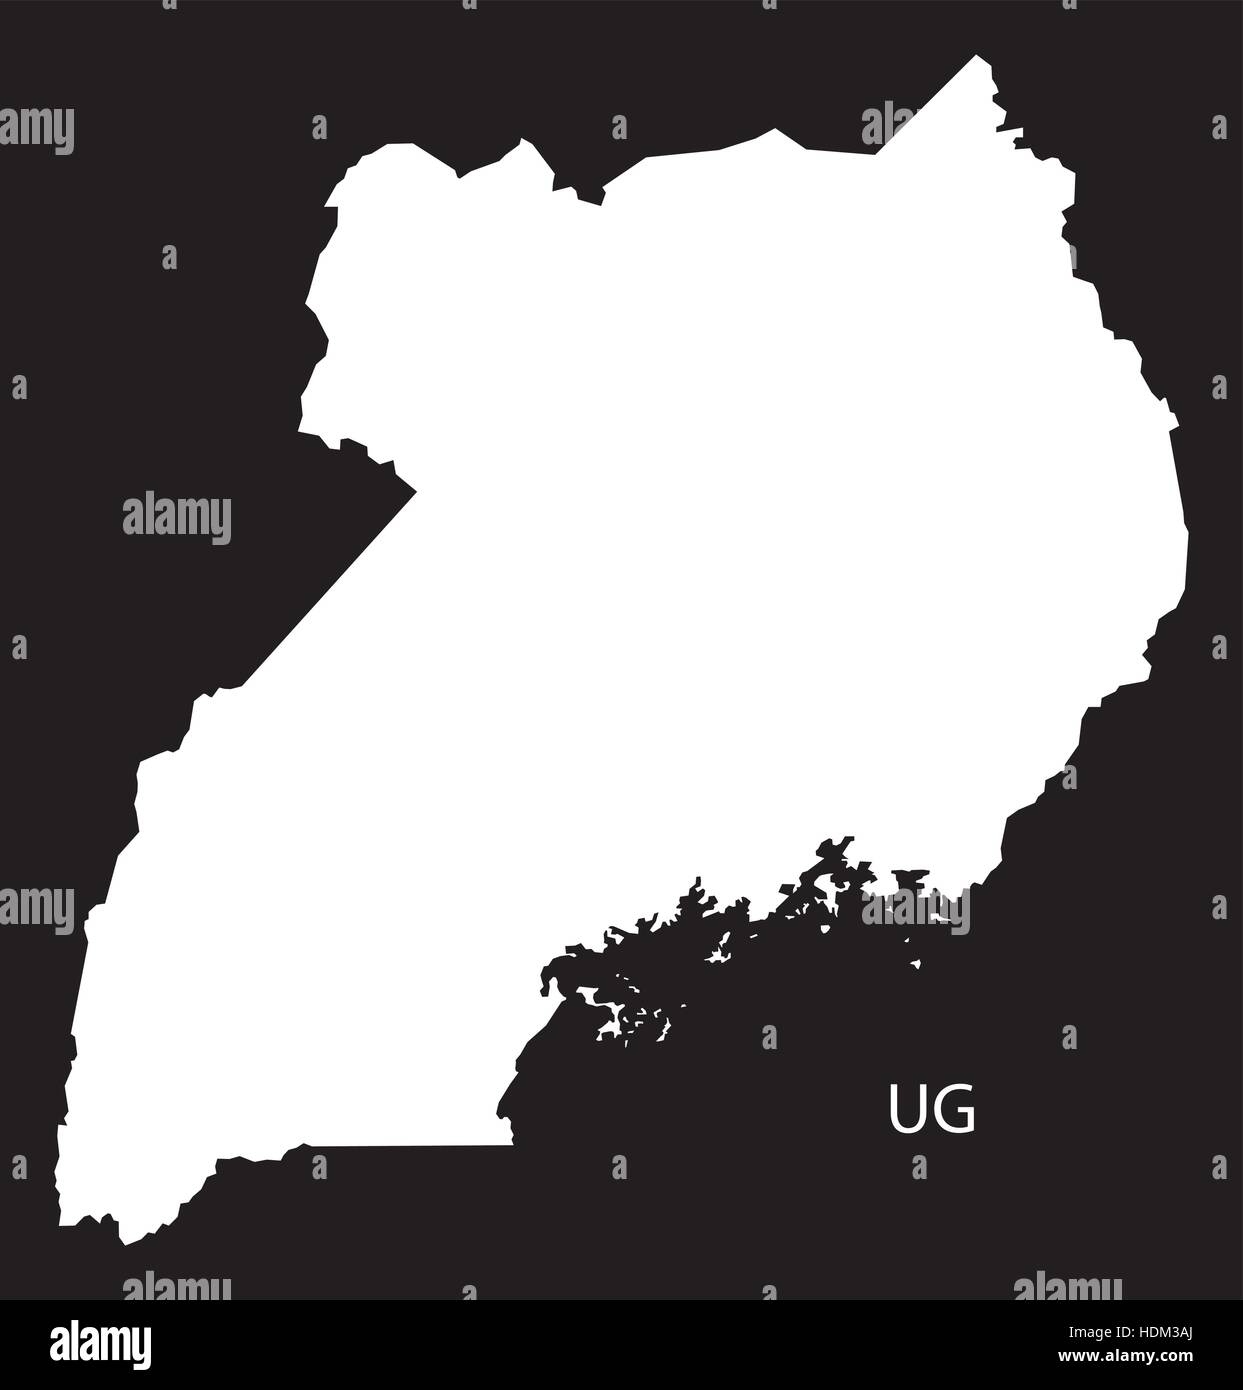 Uganda Map black and white illustration Stock Vector